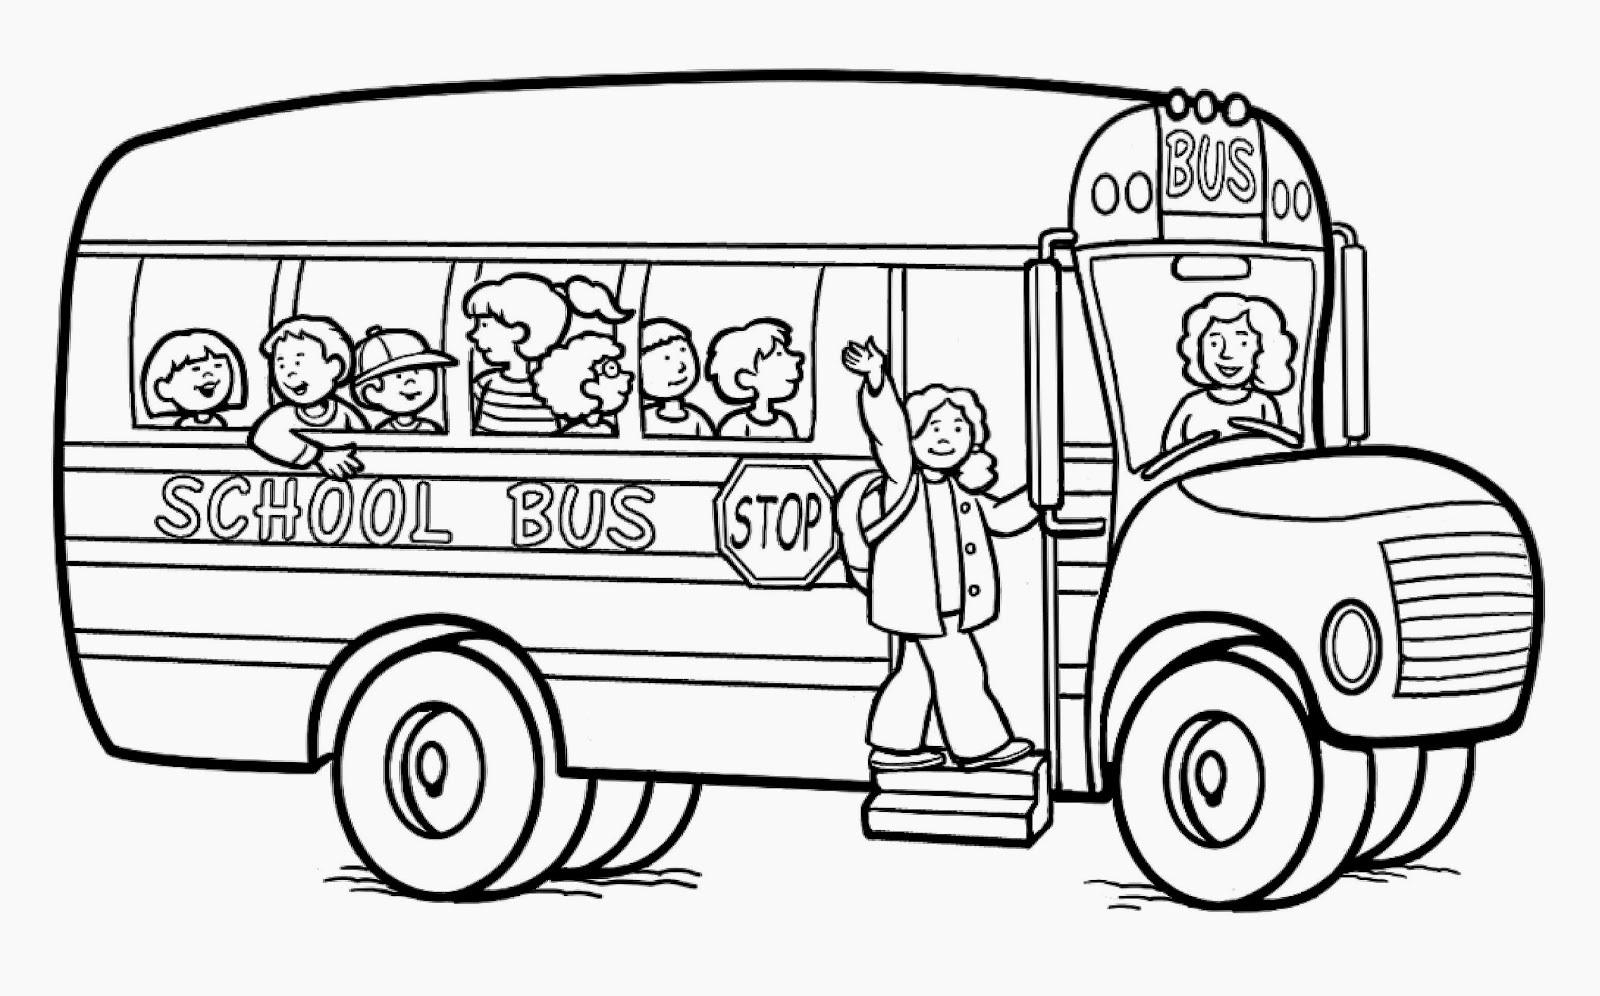 Coloring big bus for preschoolers 2-3 years old